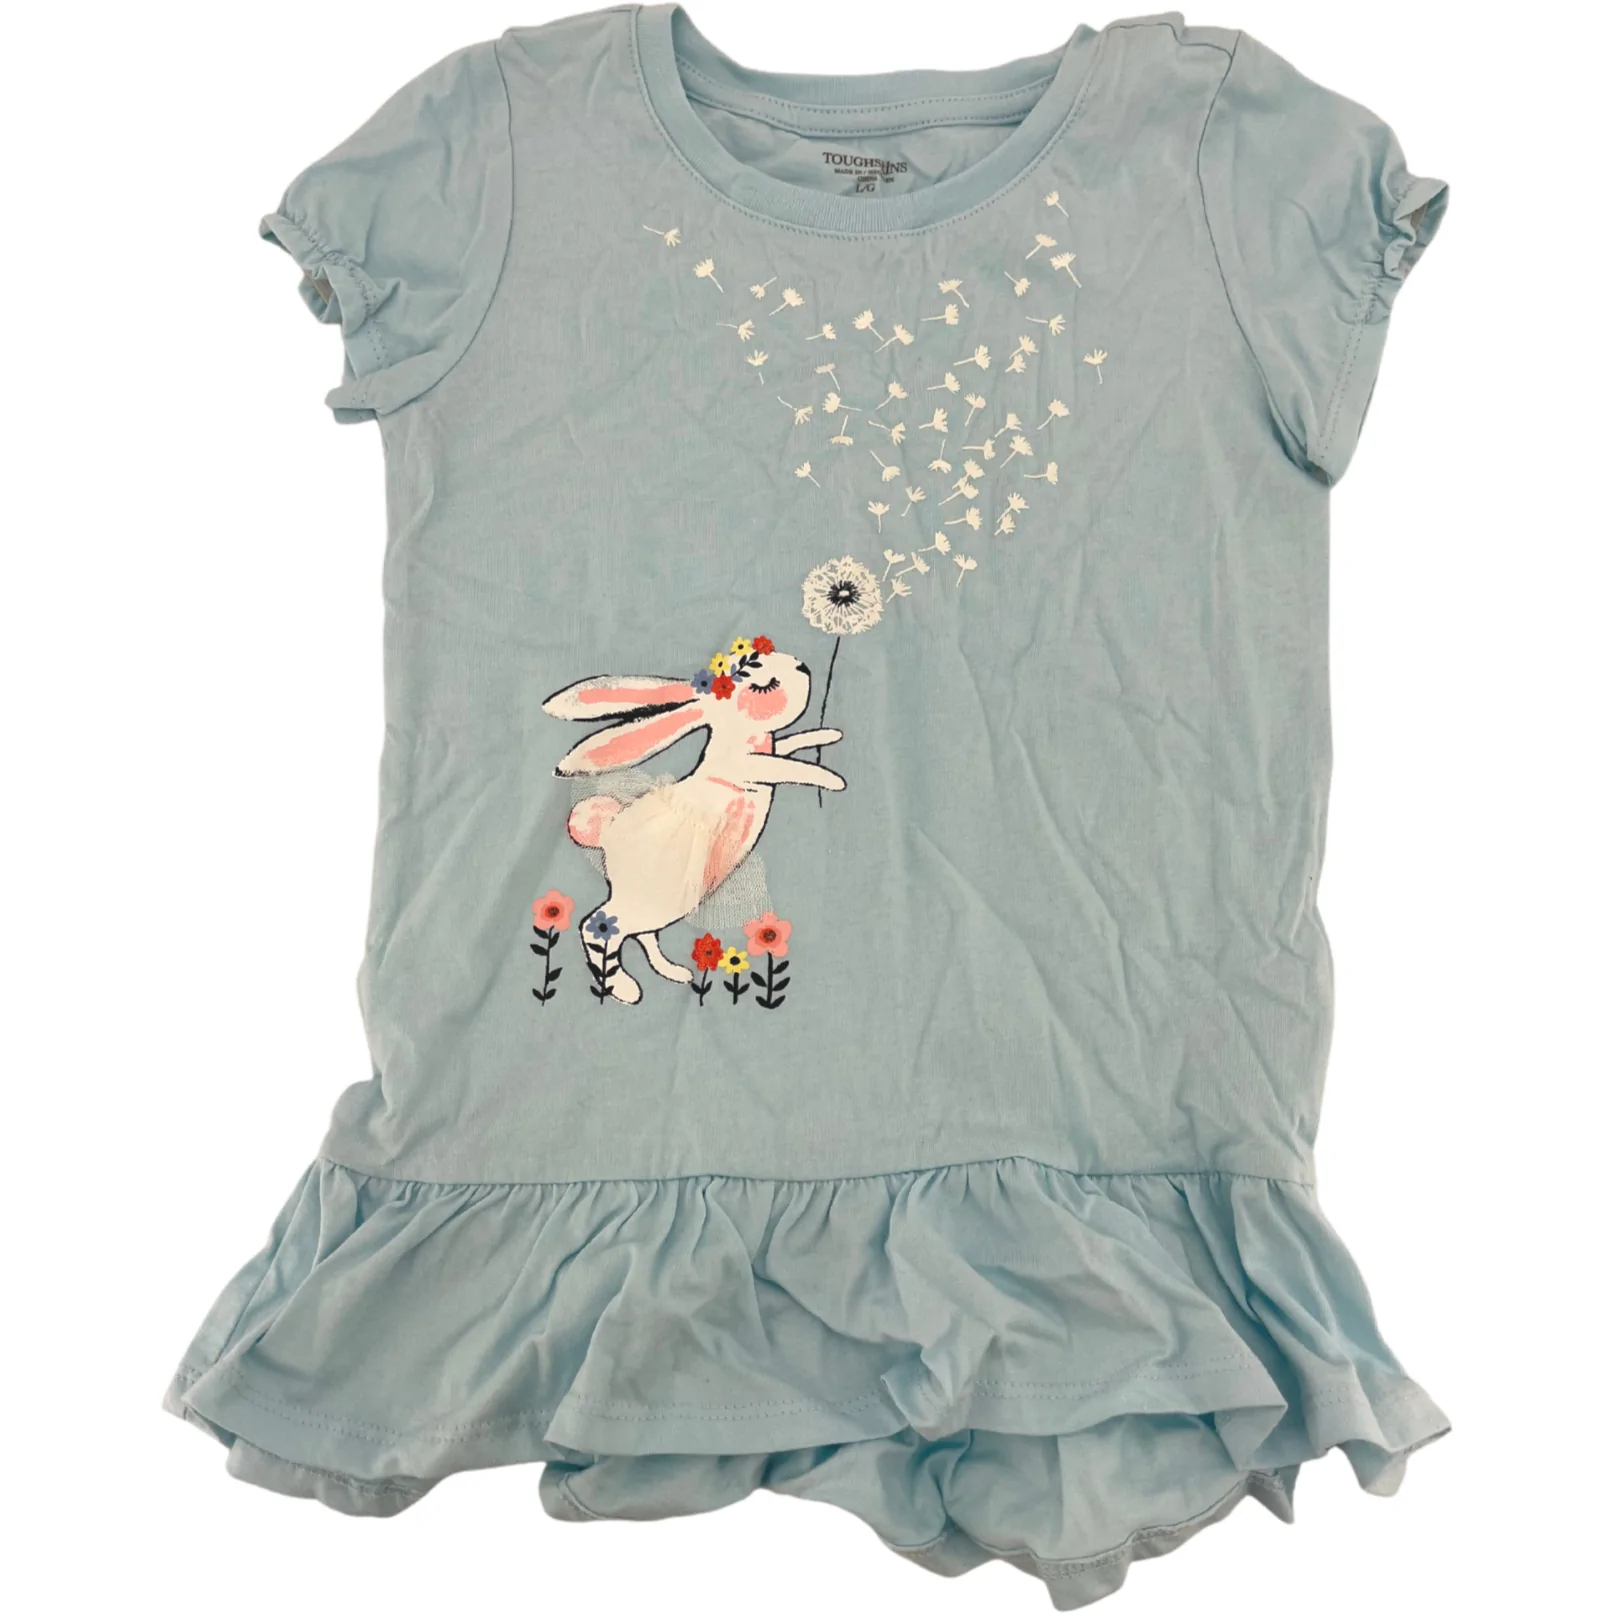 Toughskins Girl's T-Shirt / Bunny Theme / Light Blue / Size Large